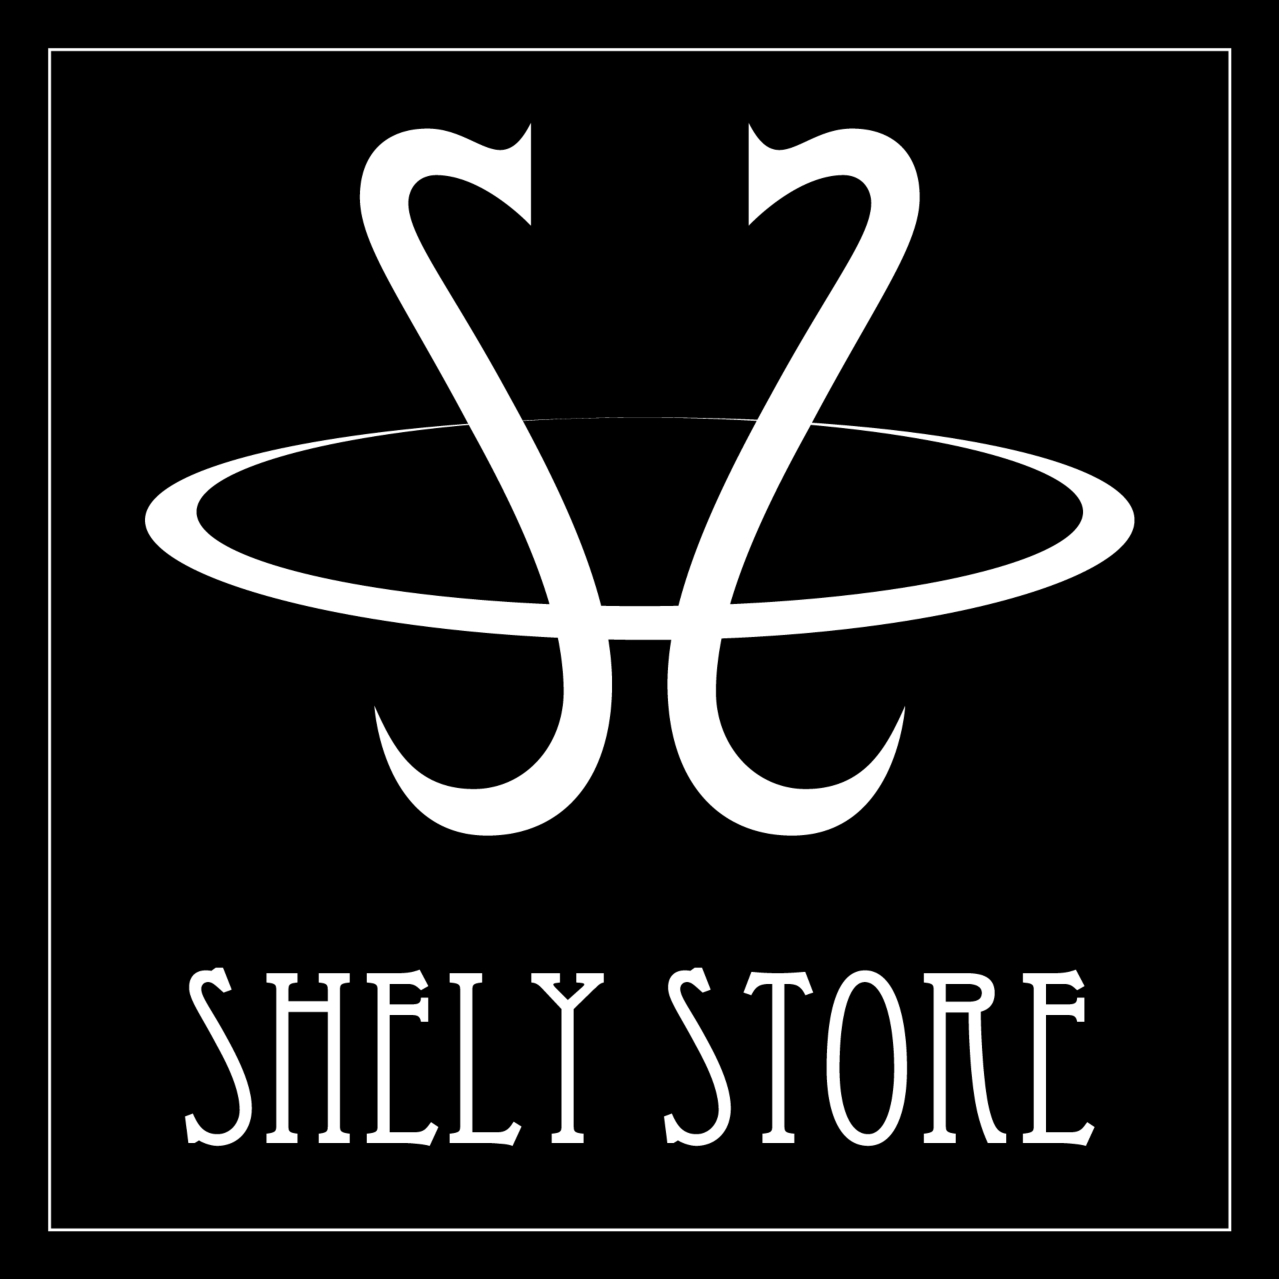 ShelyStore.jpg